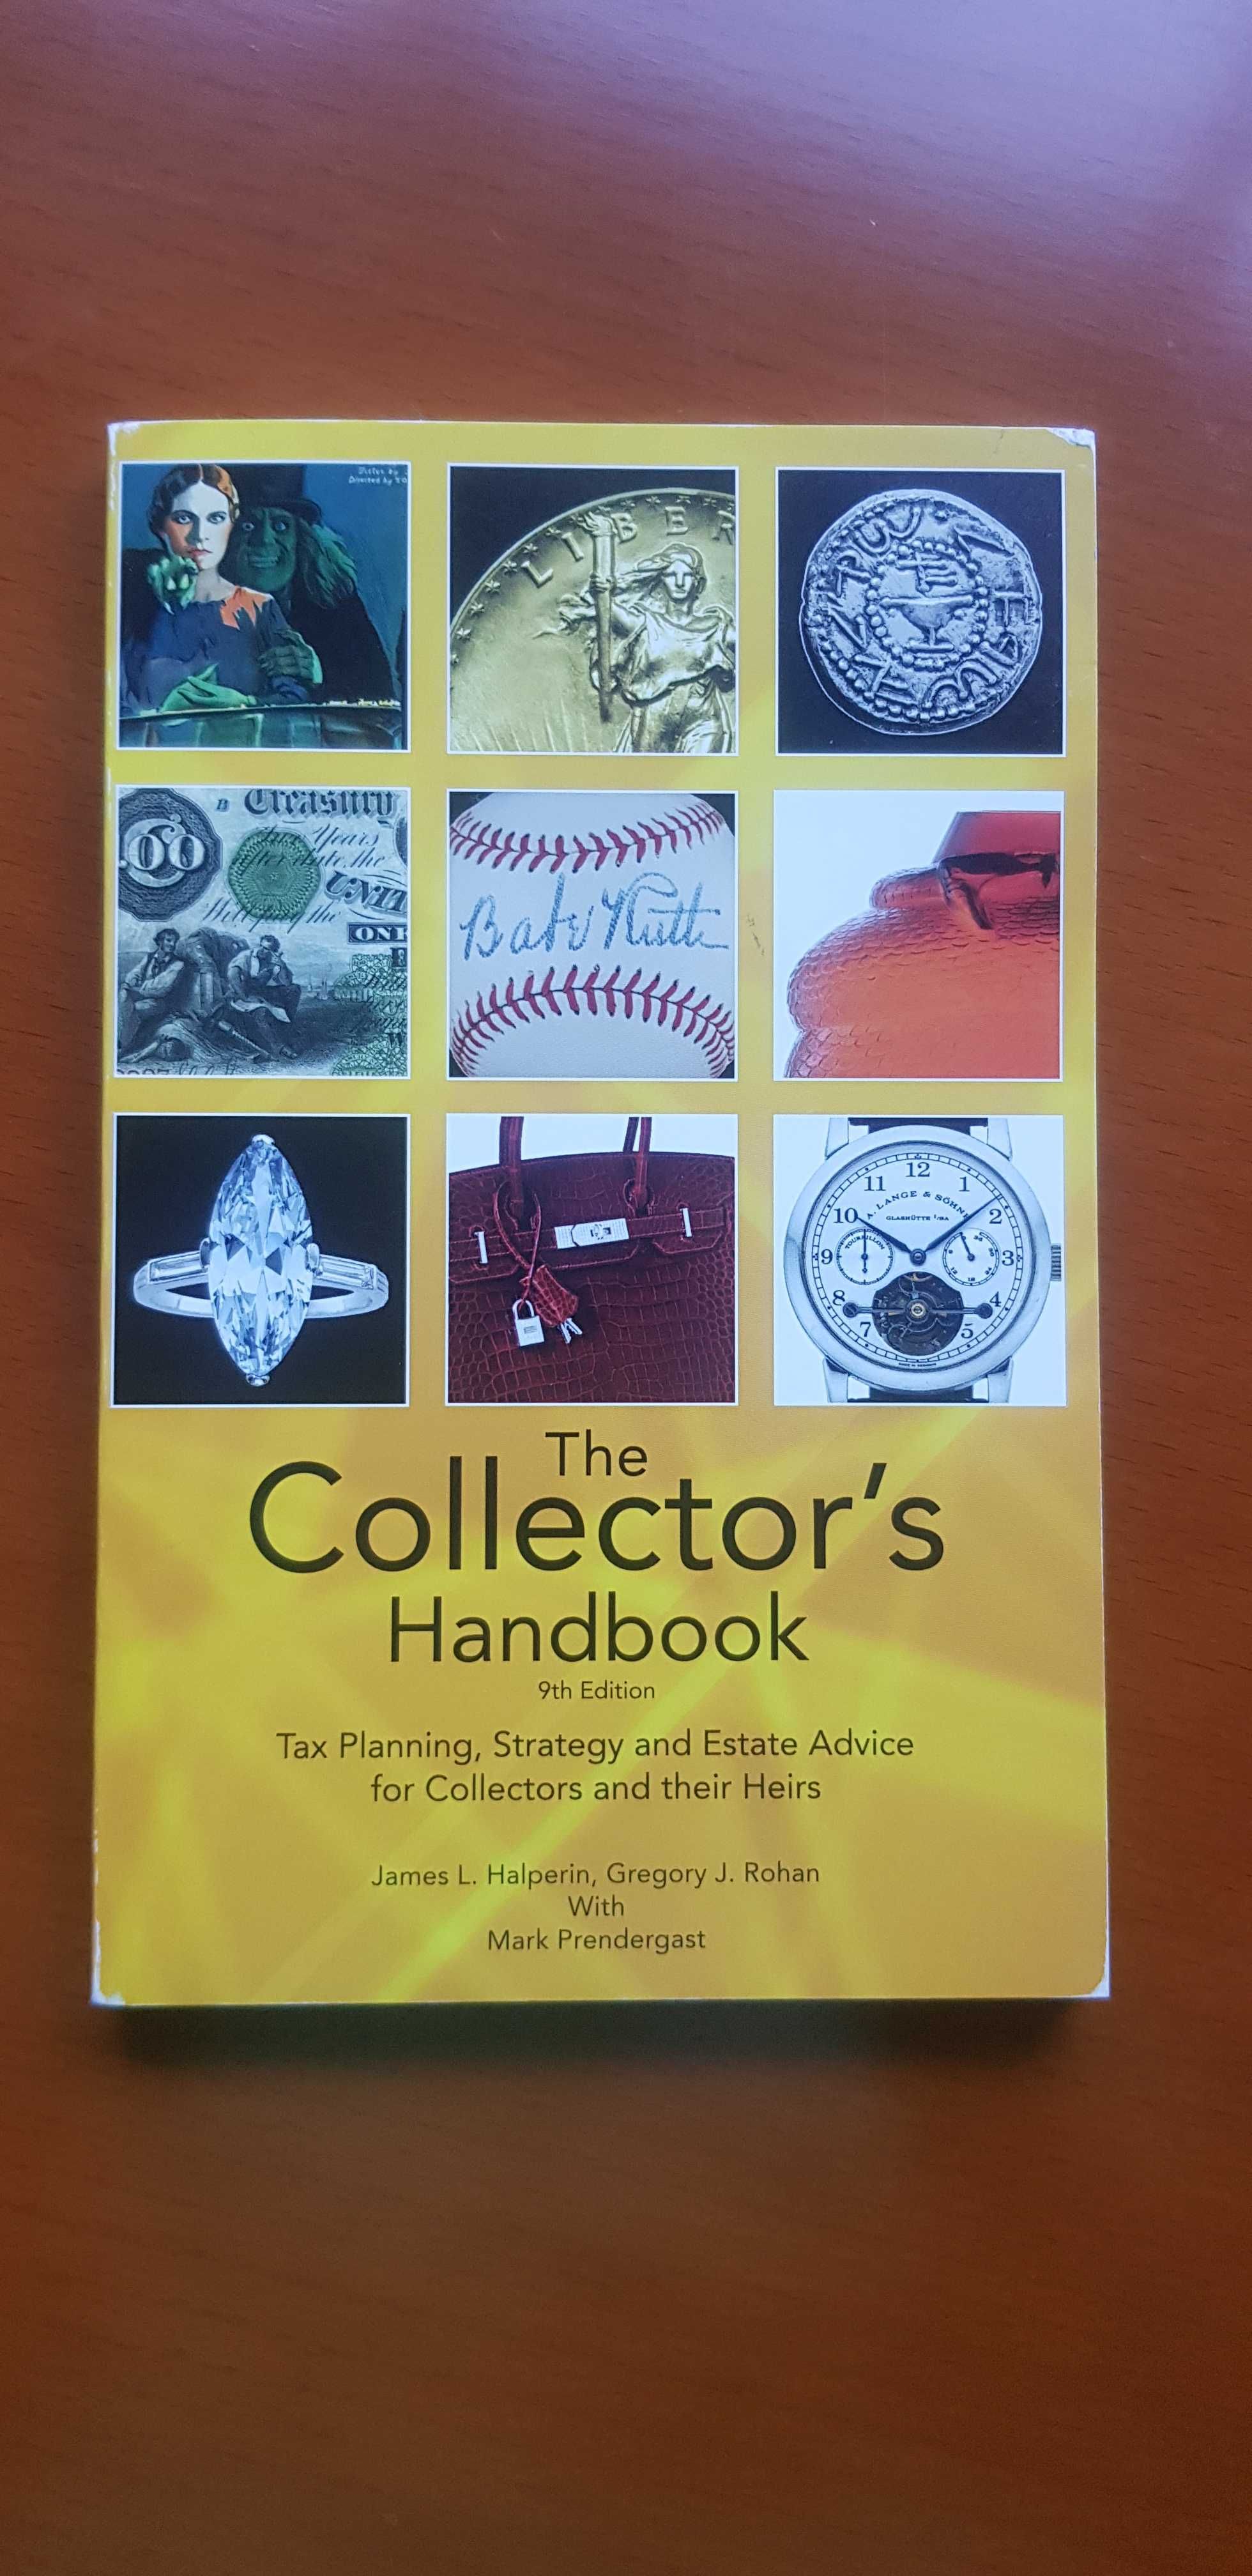 The collector's handbook 9th edition